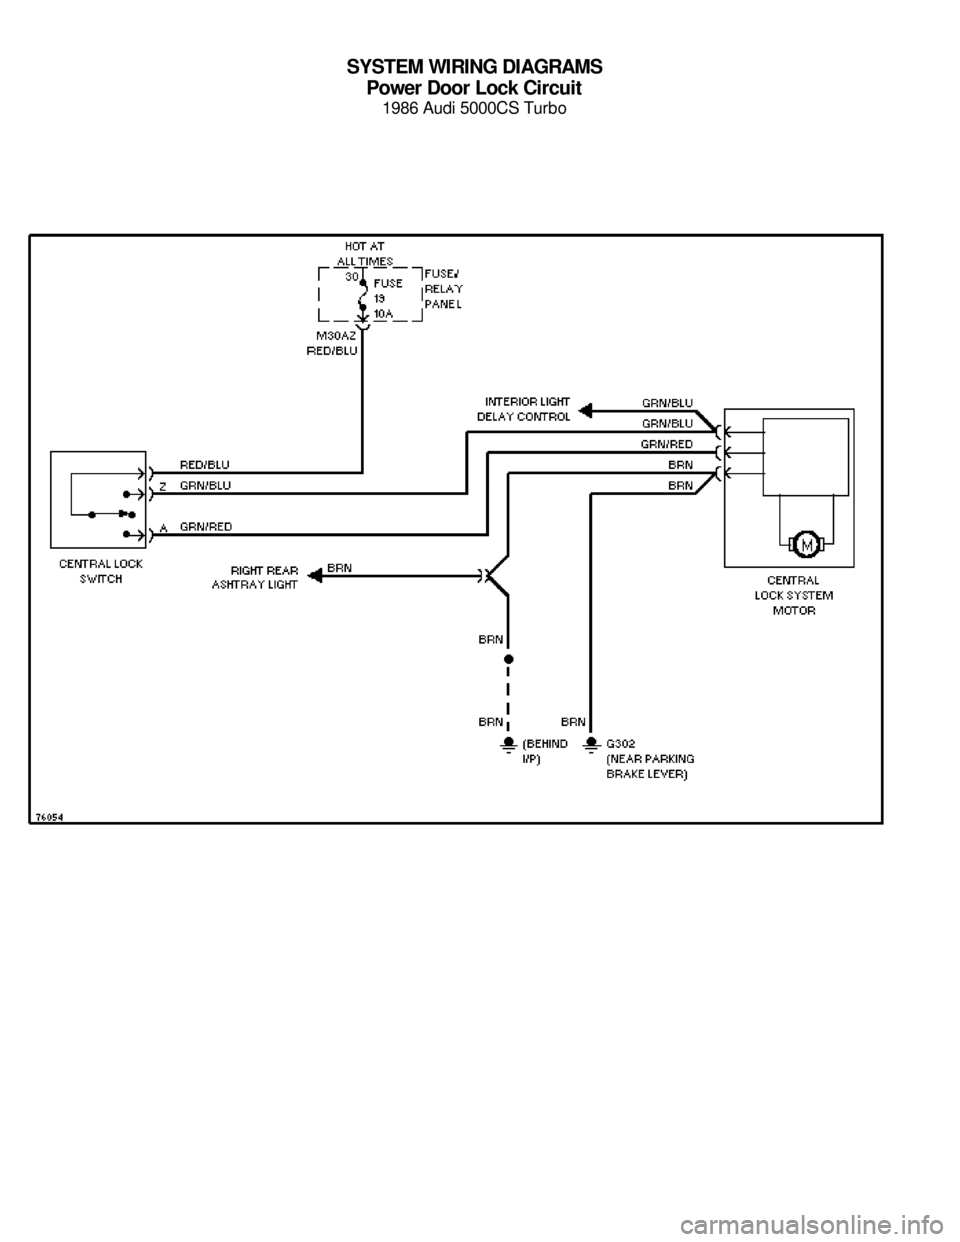 AUDI 5000CS 1986 C2 System Wiring Diagram SYSTEM WIRING DIAGRAMS
Power Door Lock Circuit
1986 Audi 5000CS Turbo
For x    
Copyright © 1998 Mitchell Repair Information Company, LLCMonday, July 19, 2004  05:52PM 